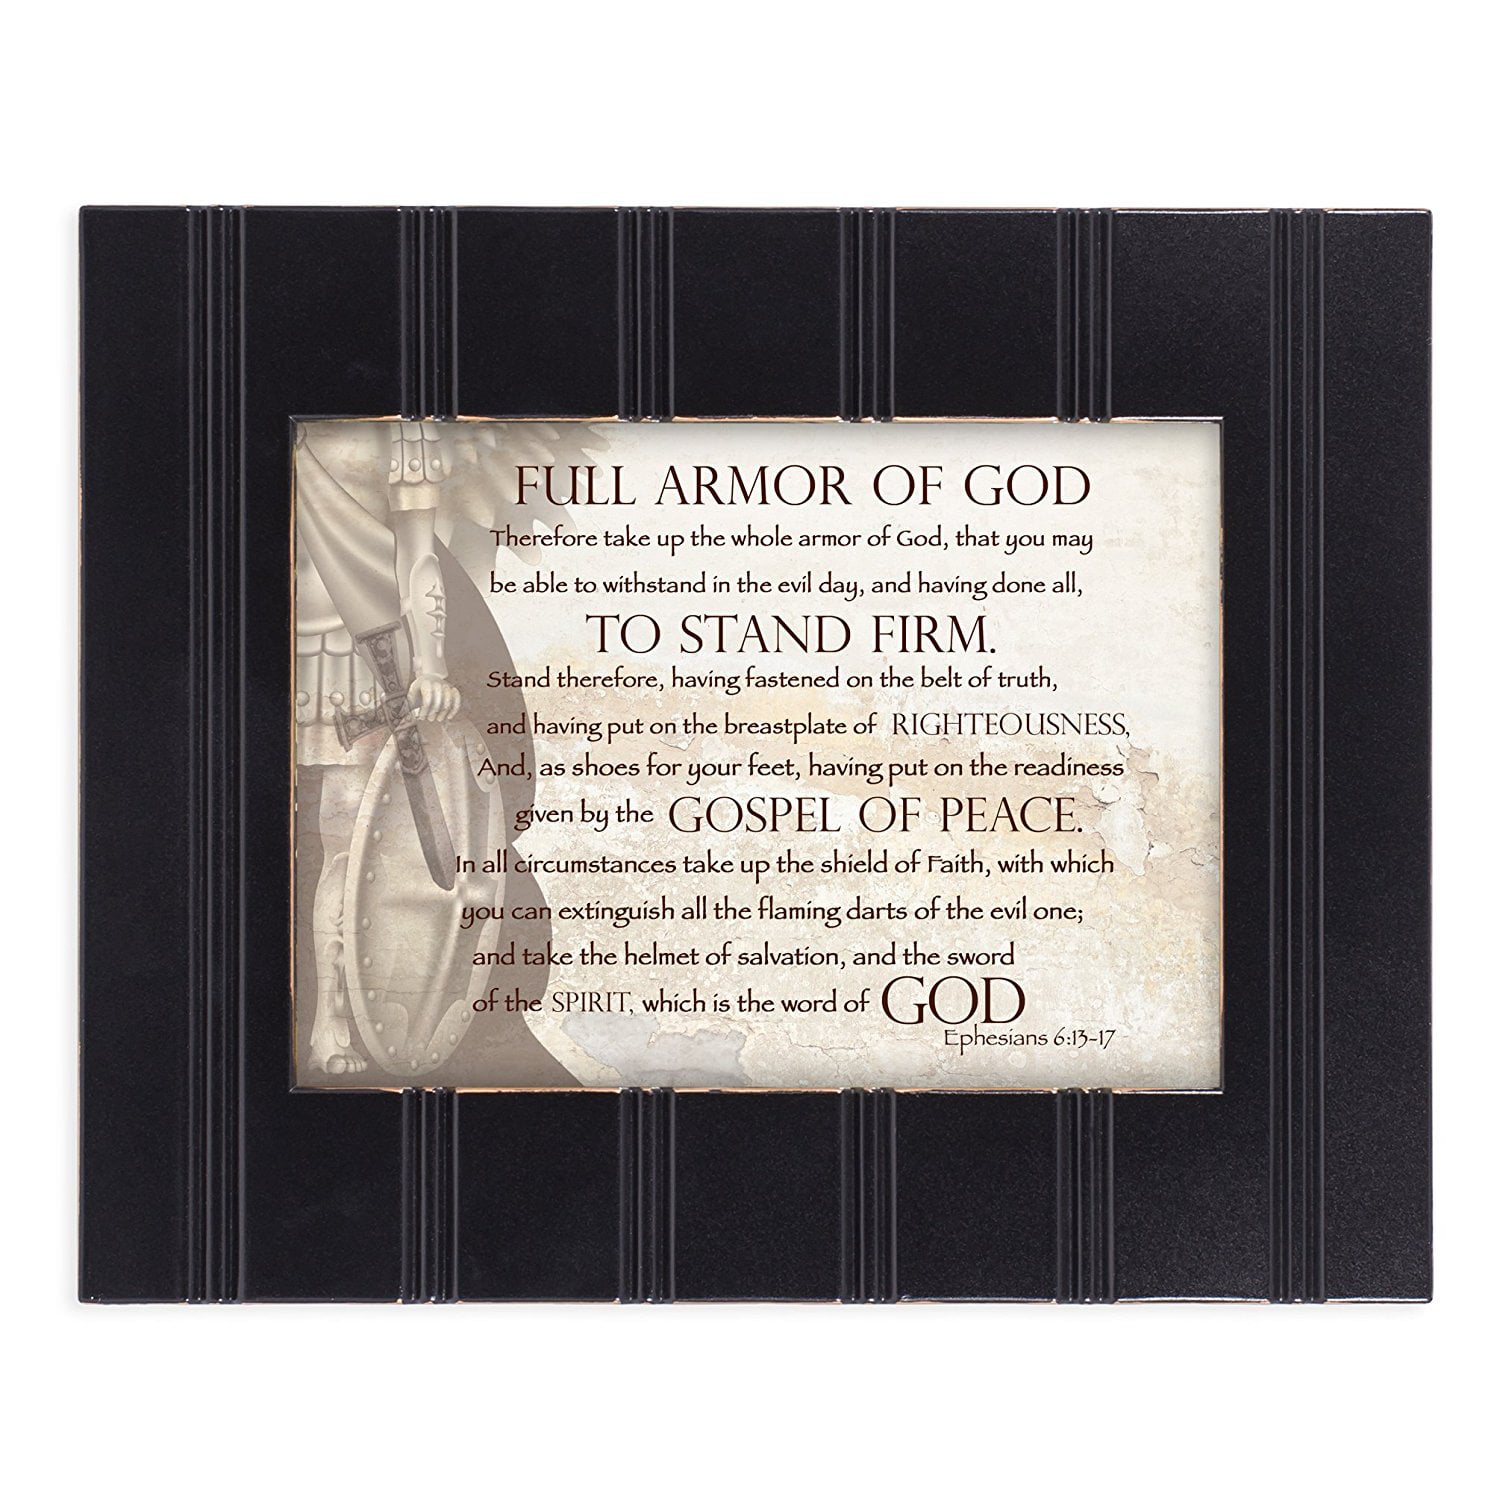 Decorative Armor of God Ephesians 6:13-17 Desk Plaque 